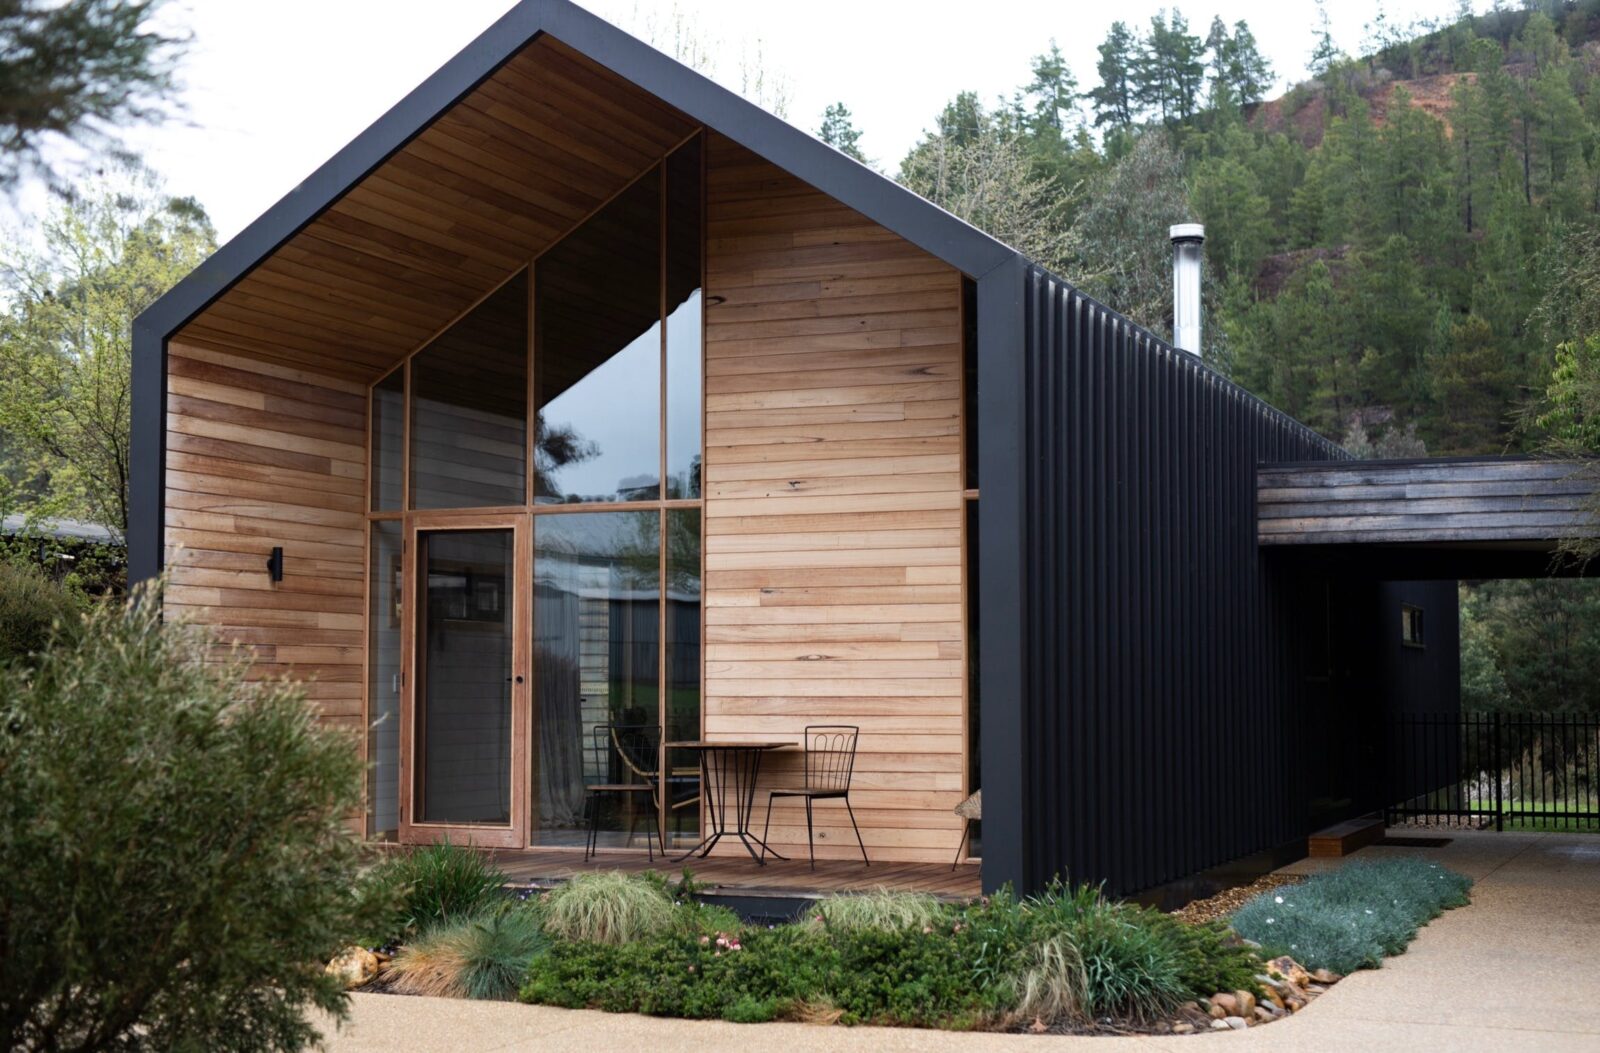 Scandinavian style Home, glass windows, angled roof